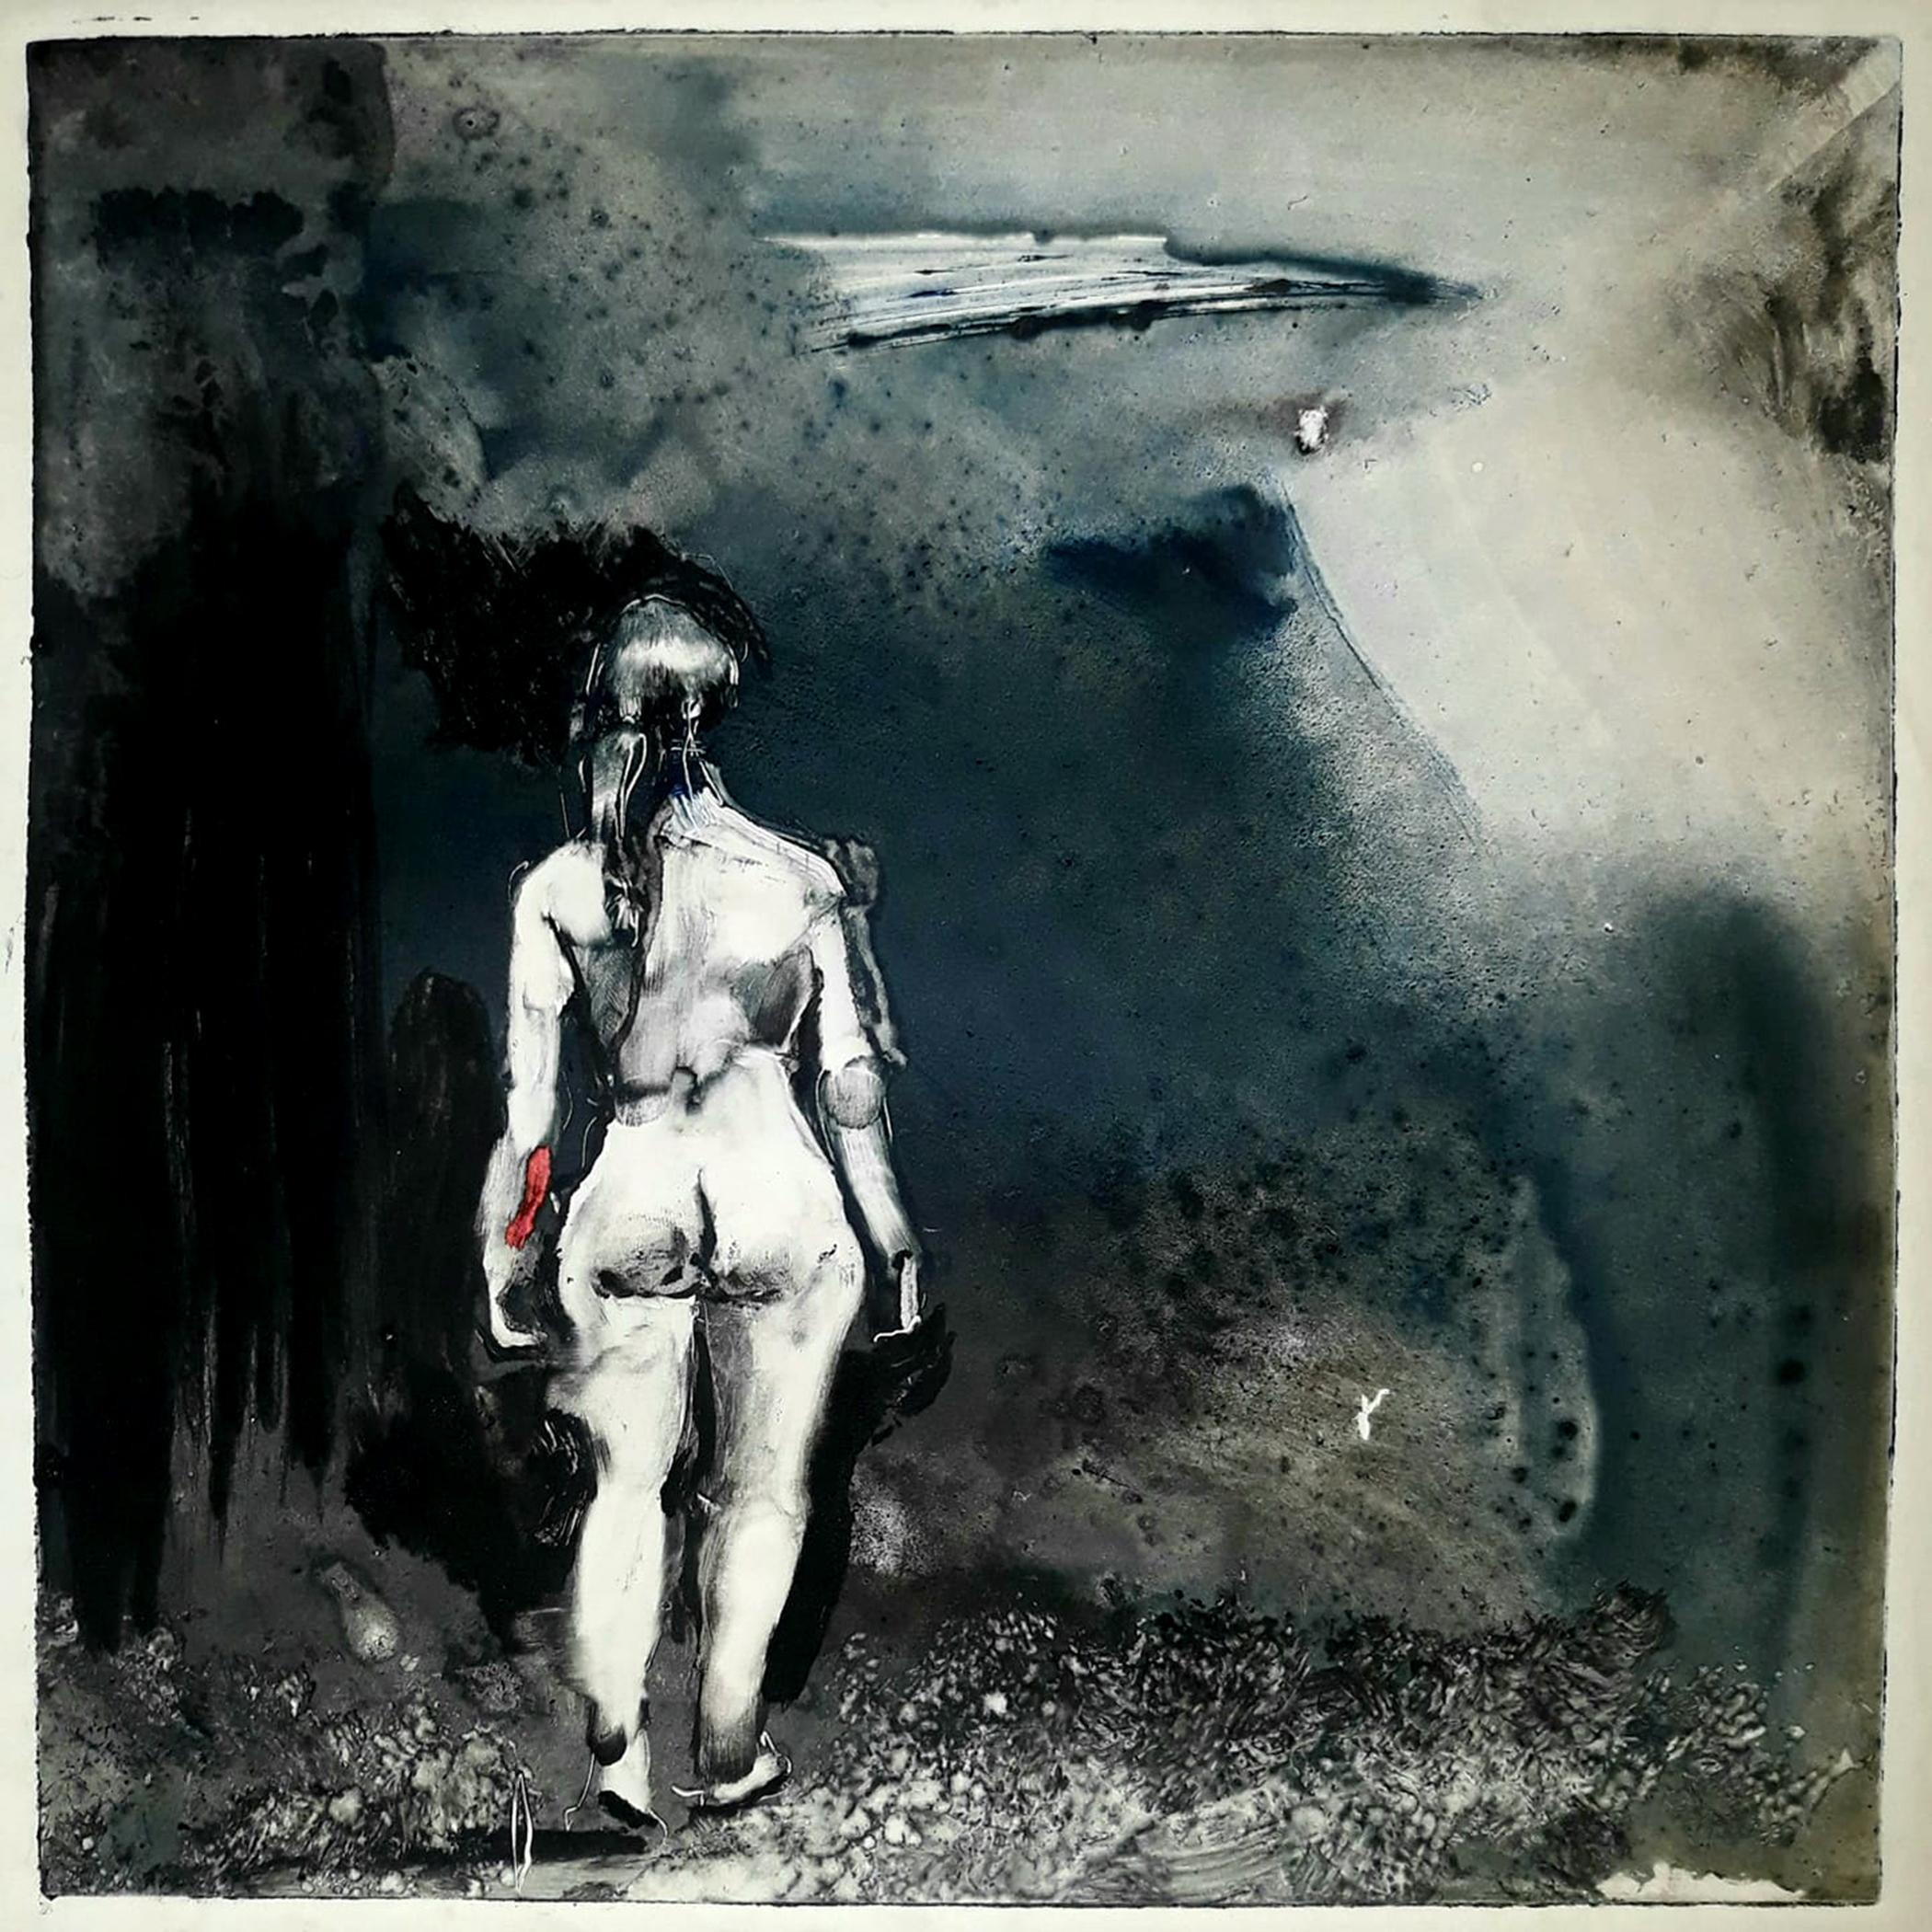 Tom Bennett Landscape Art - Unconscious 4, dramatic black and white dream image, nude